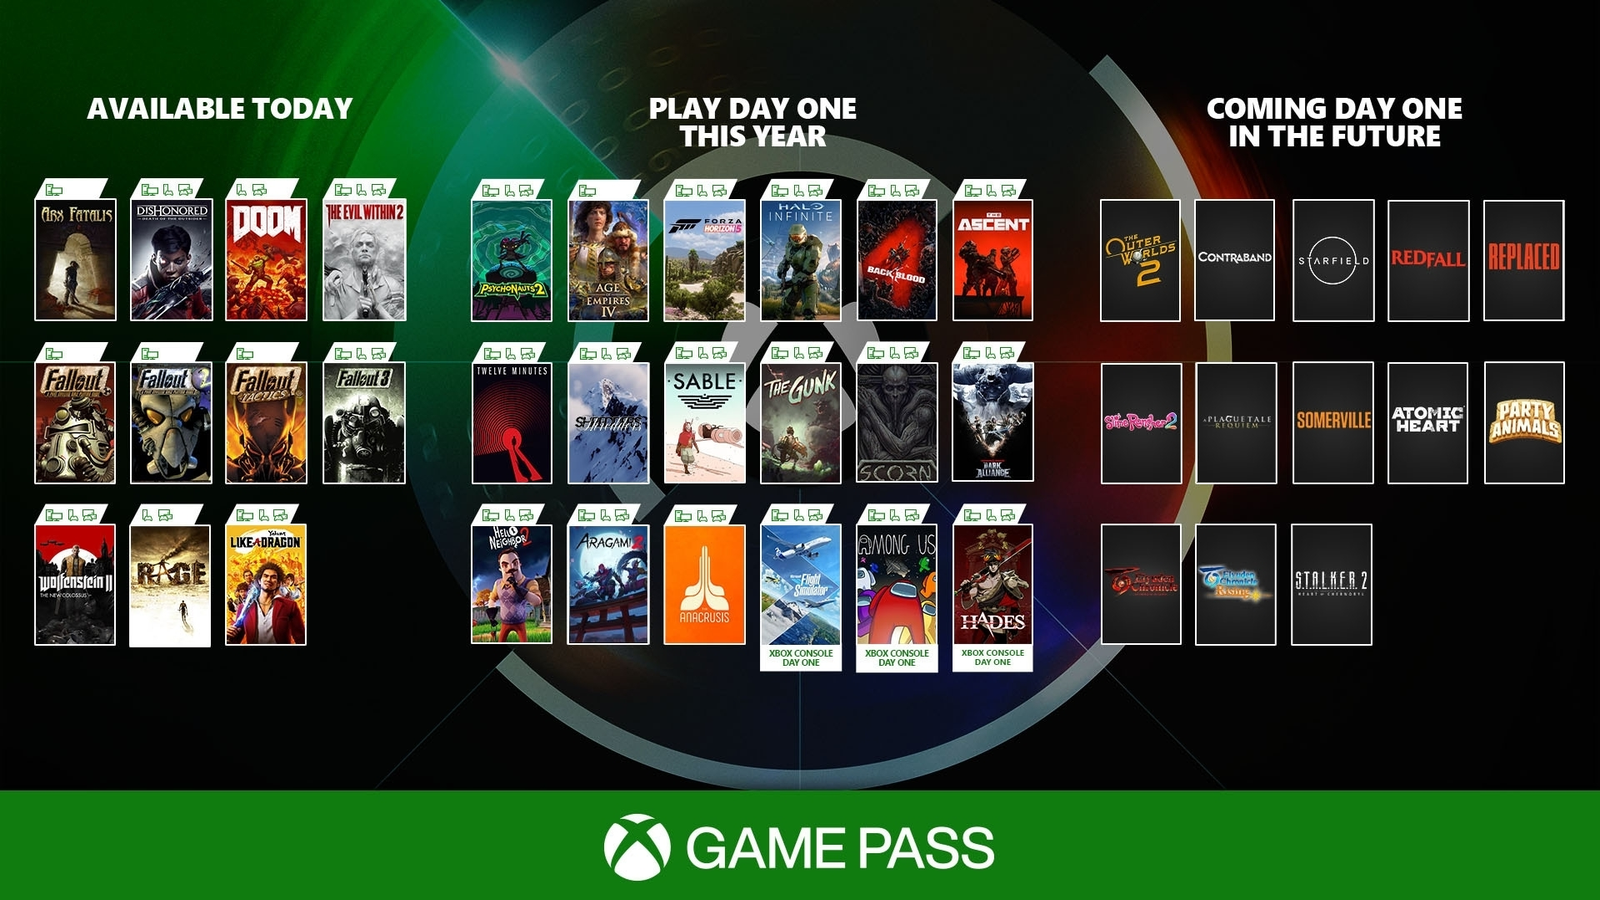 Xbox Game Pass Reveals Huge November Games